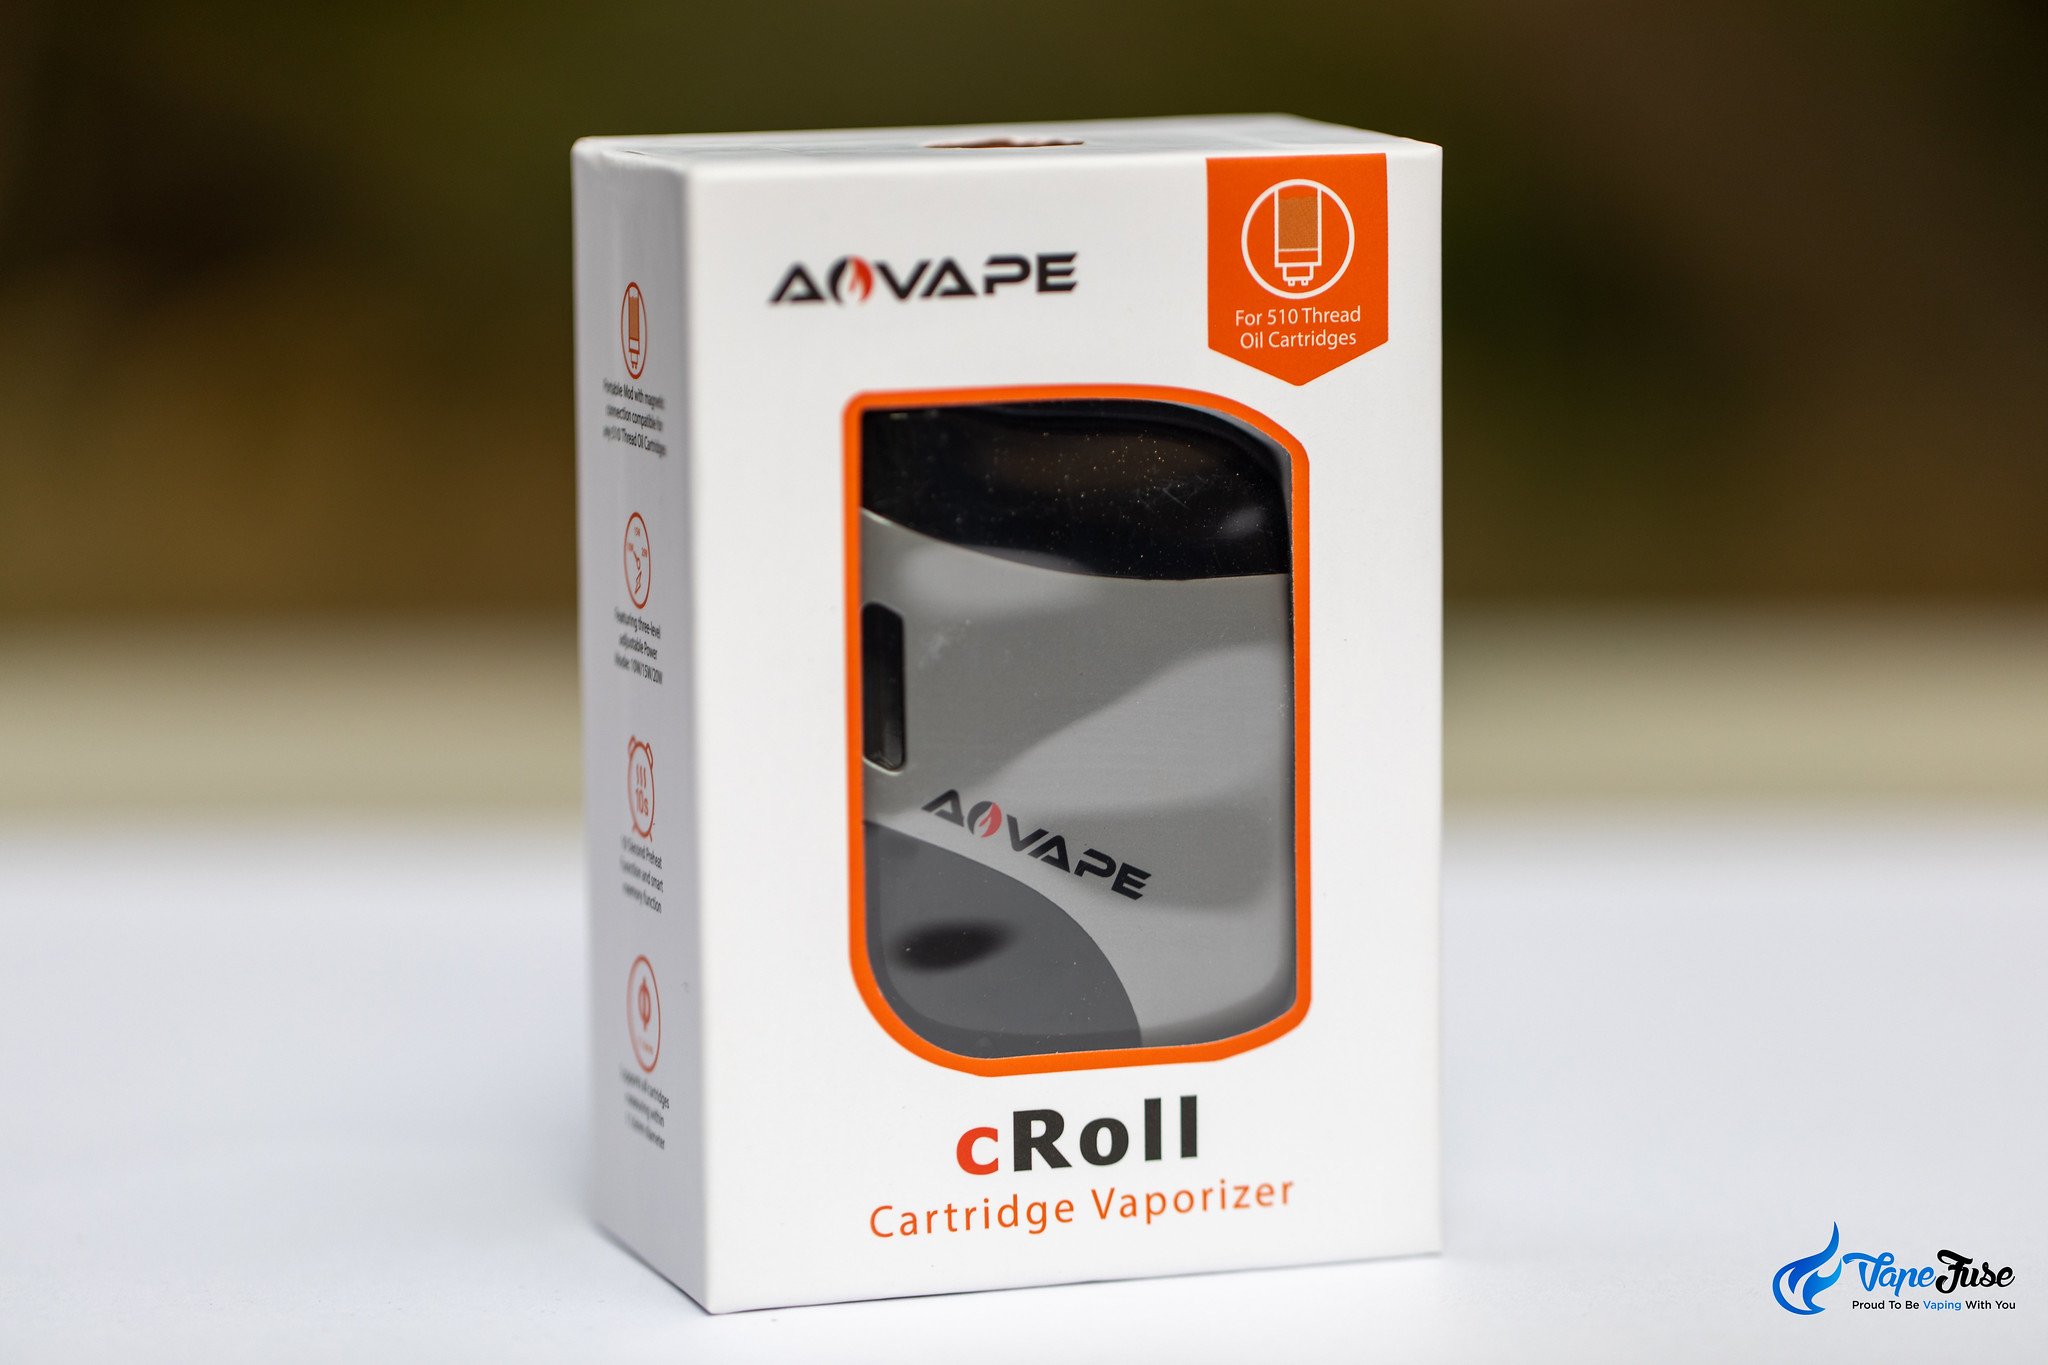 Aovape cRoll 510 Cartridge Vaporizer Review